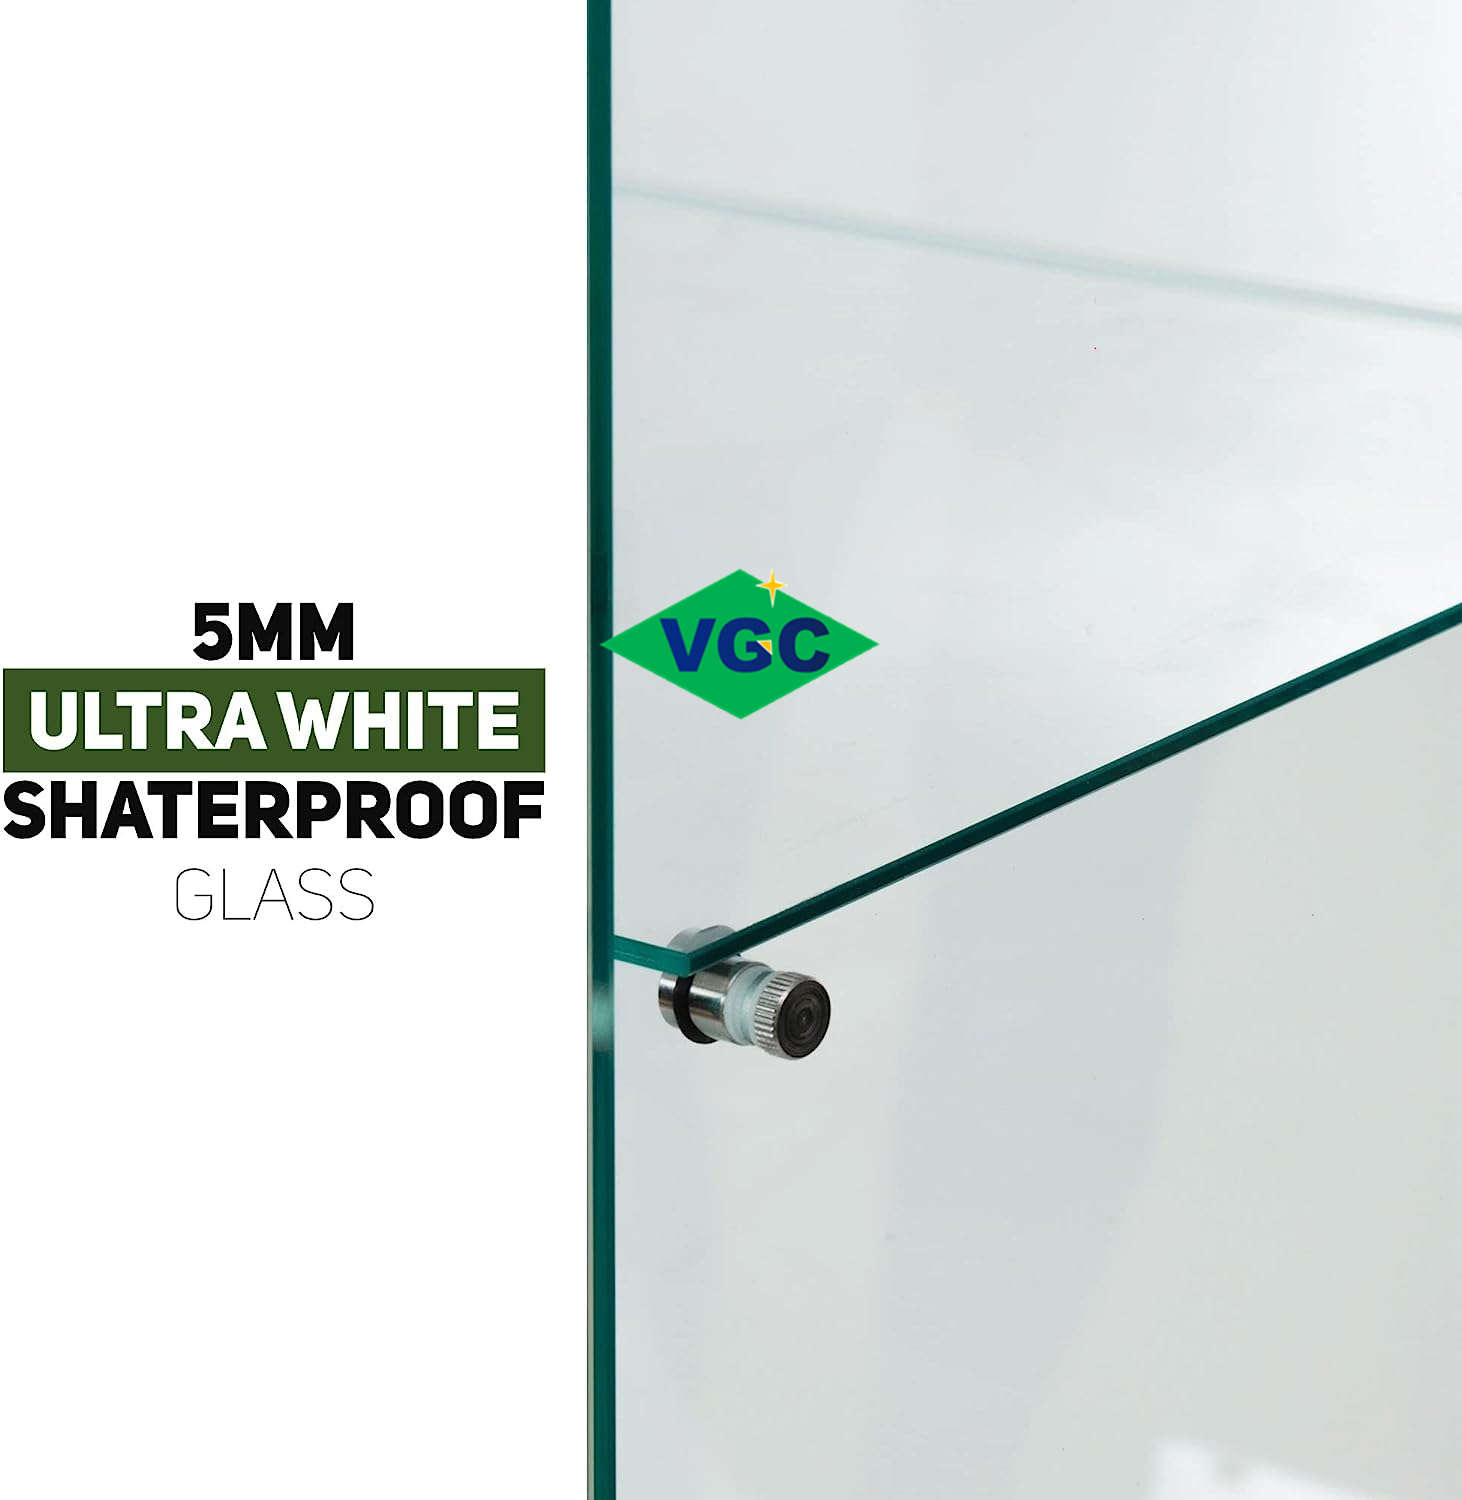 5MM Shaffer proof ultra white glass